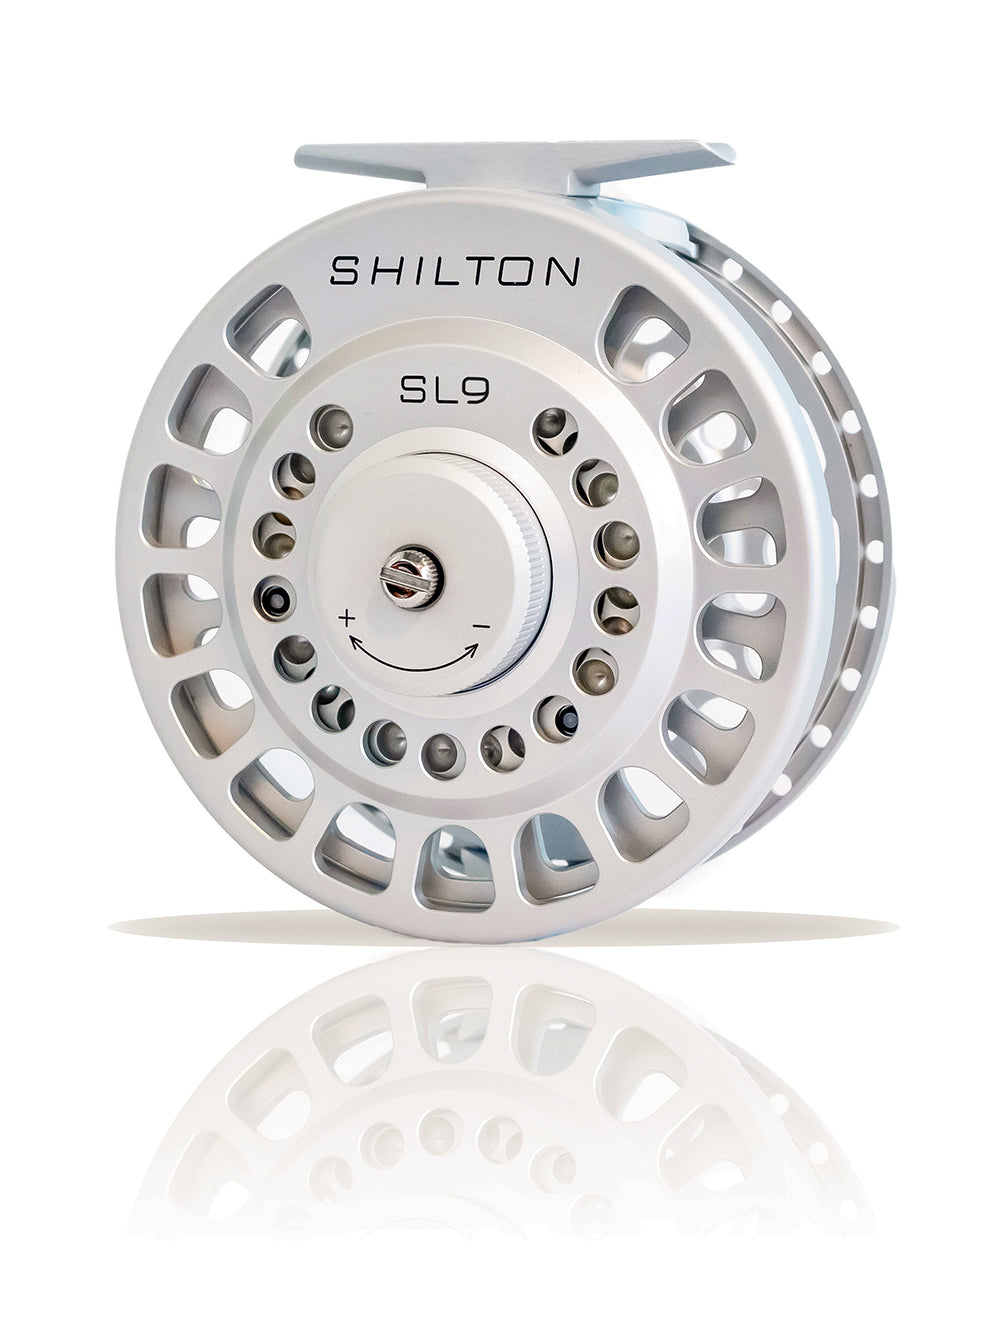 Shilton SL4 Reels (6-7wt) in Titanium Silver